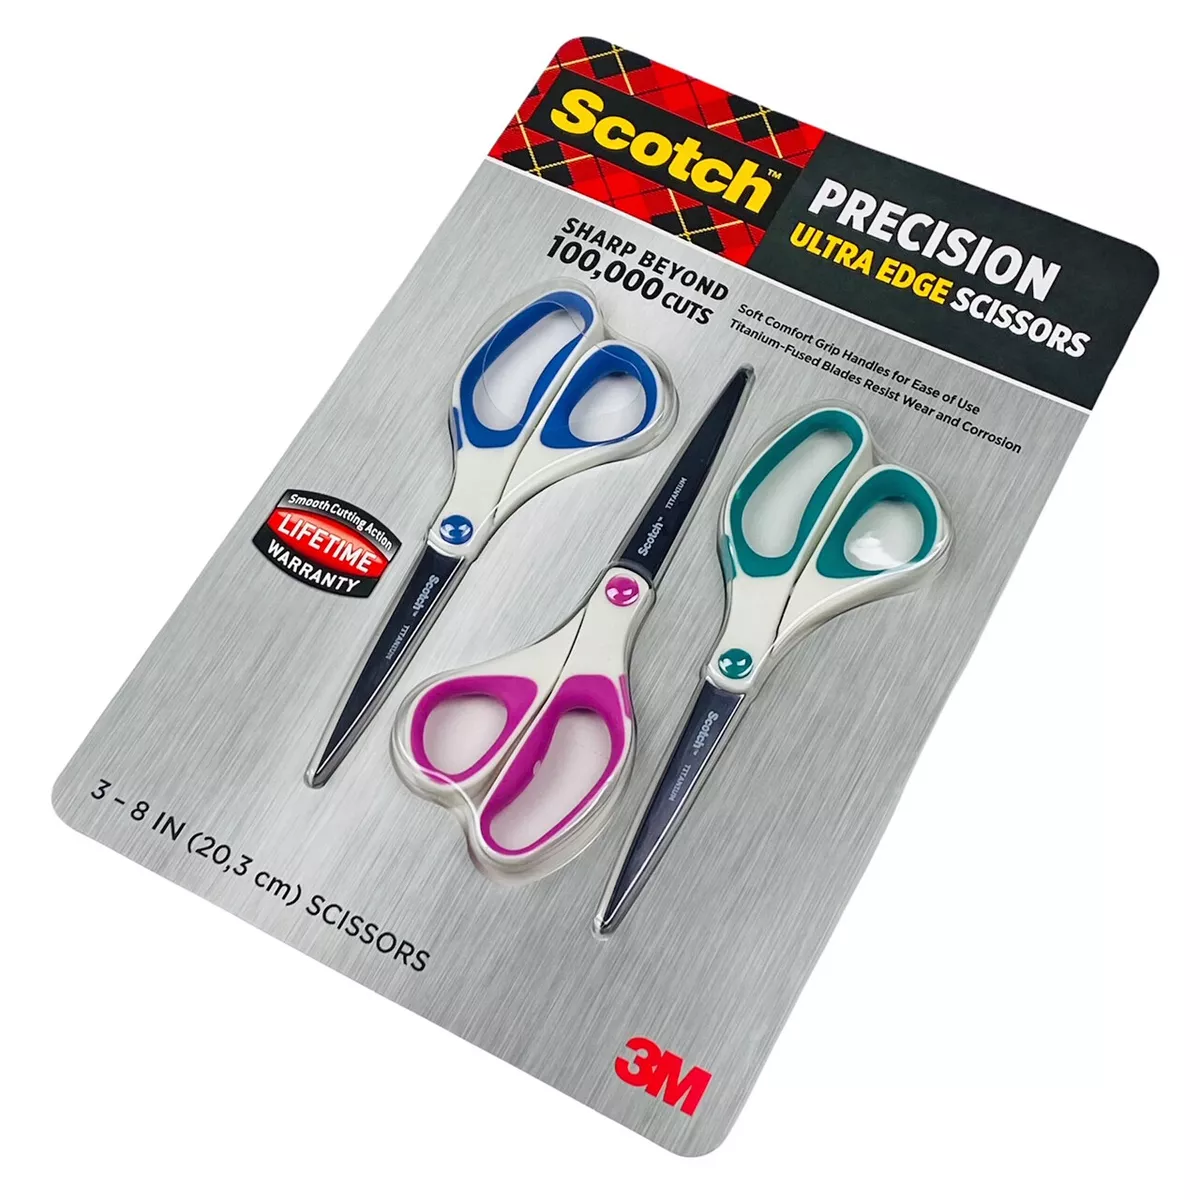 3M Precision Ultra Edge Craft Scissors